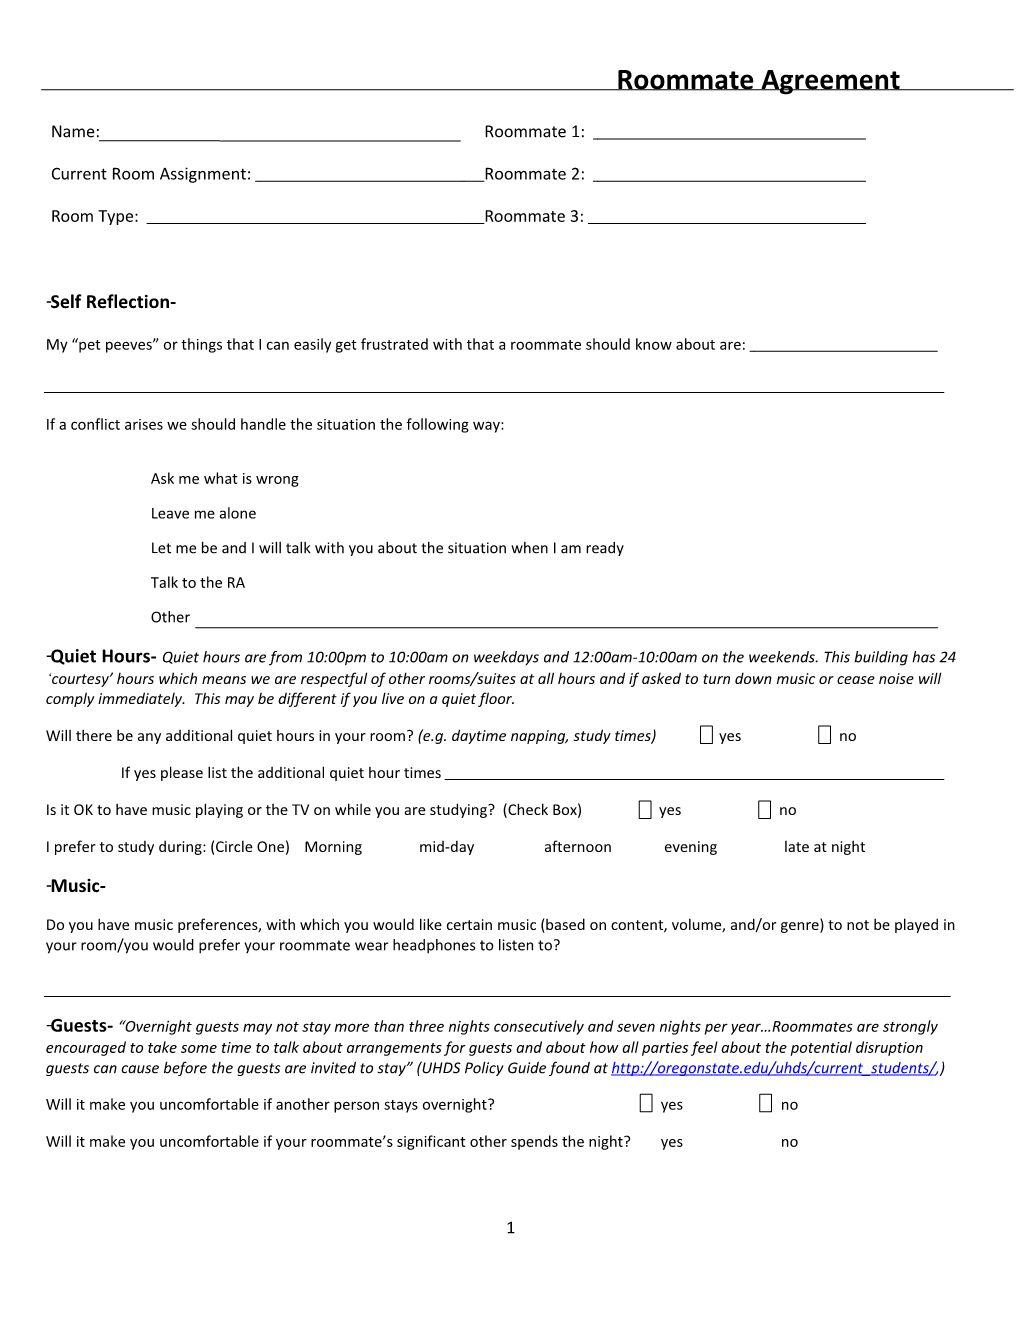 Online Hall Roommate Agreement Revised Suites 8-30-10